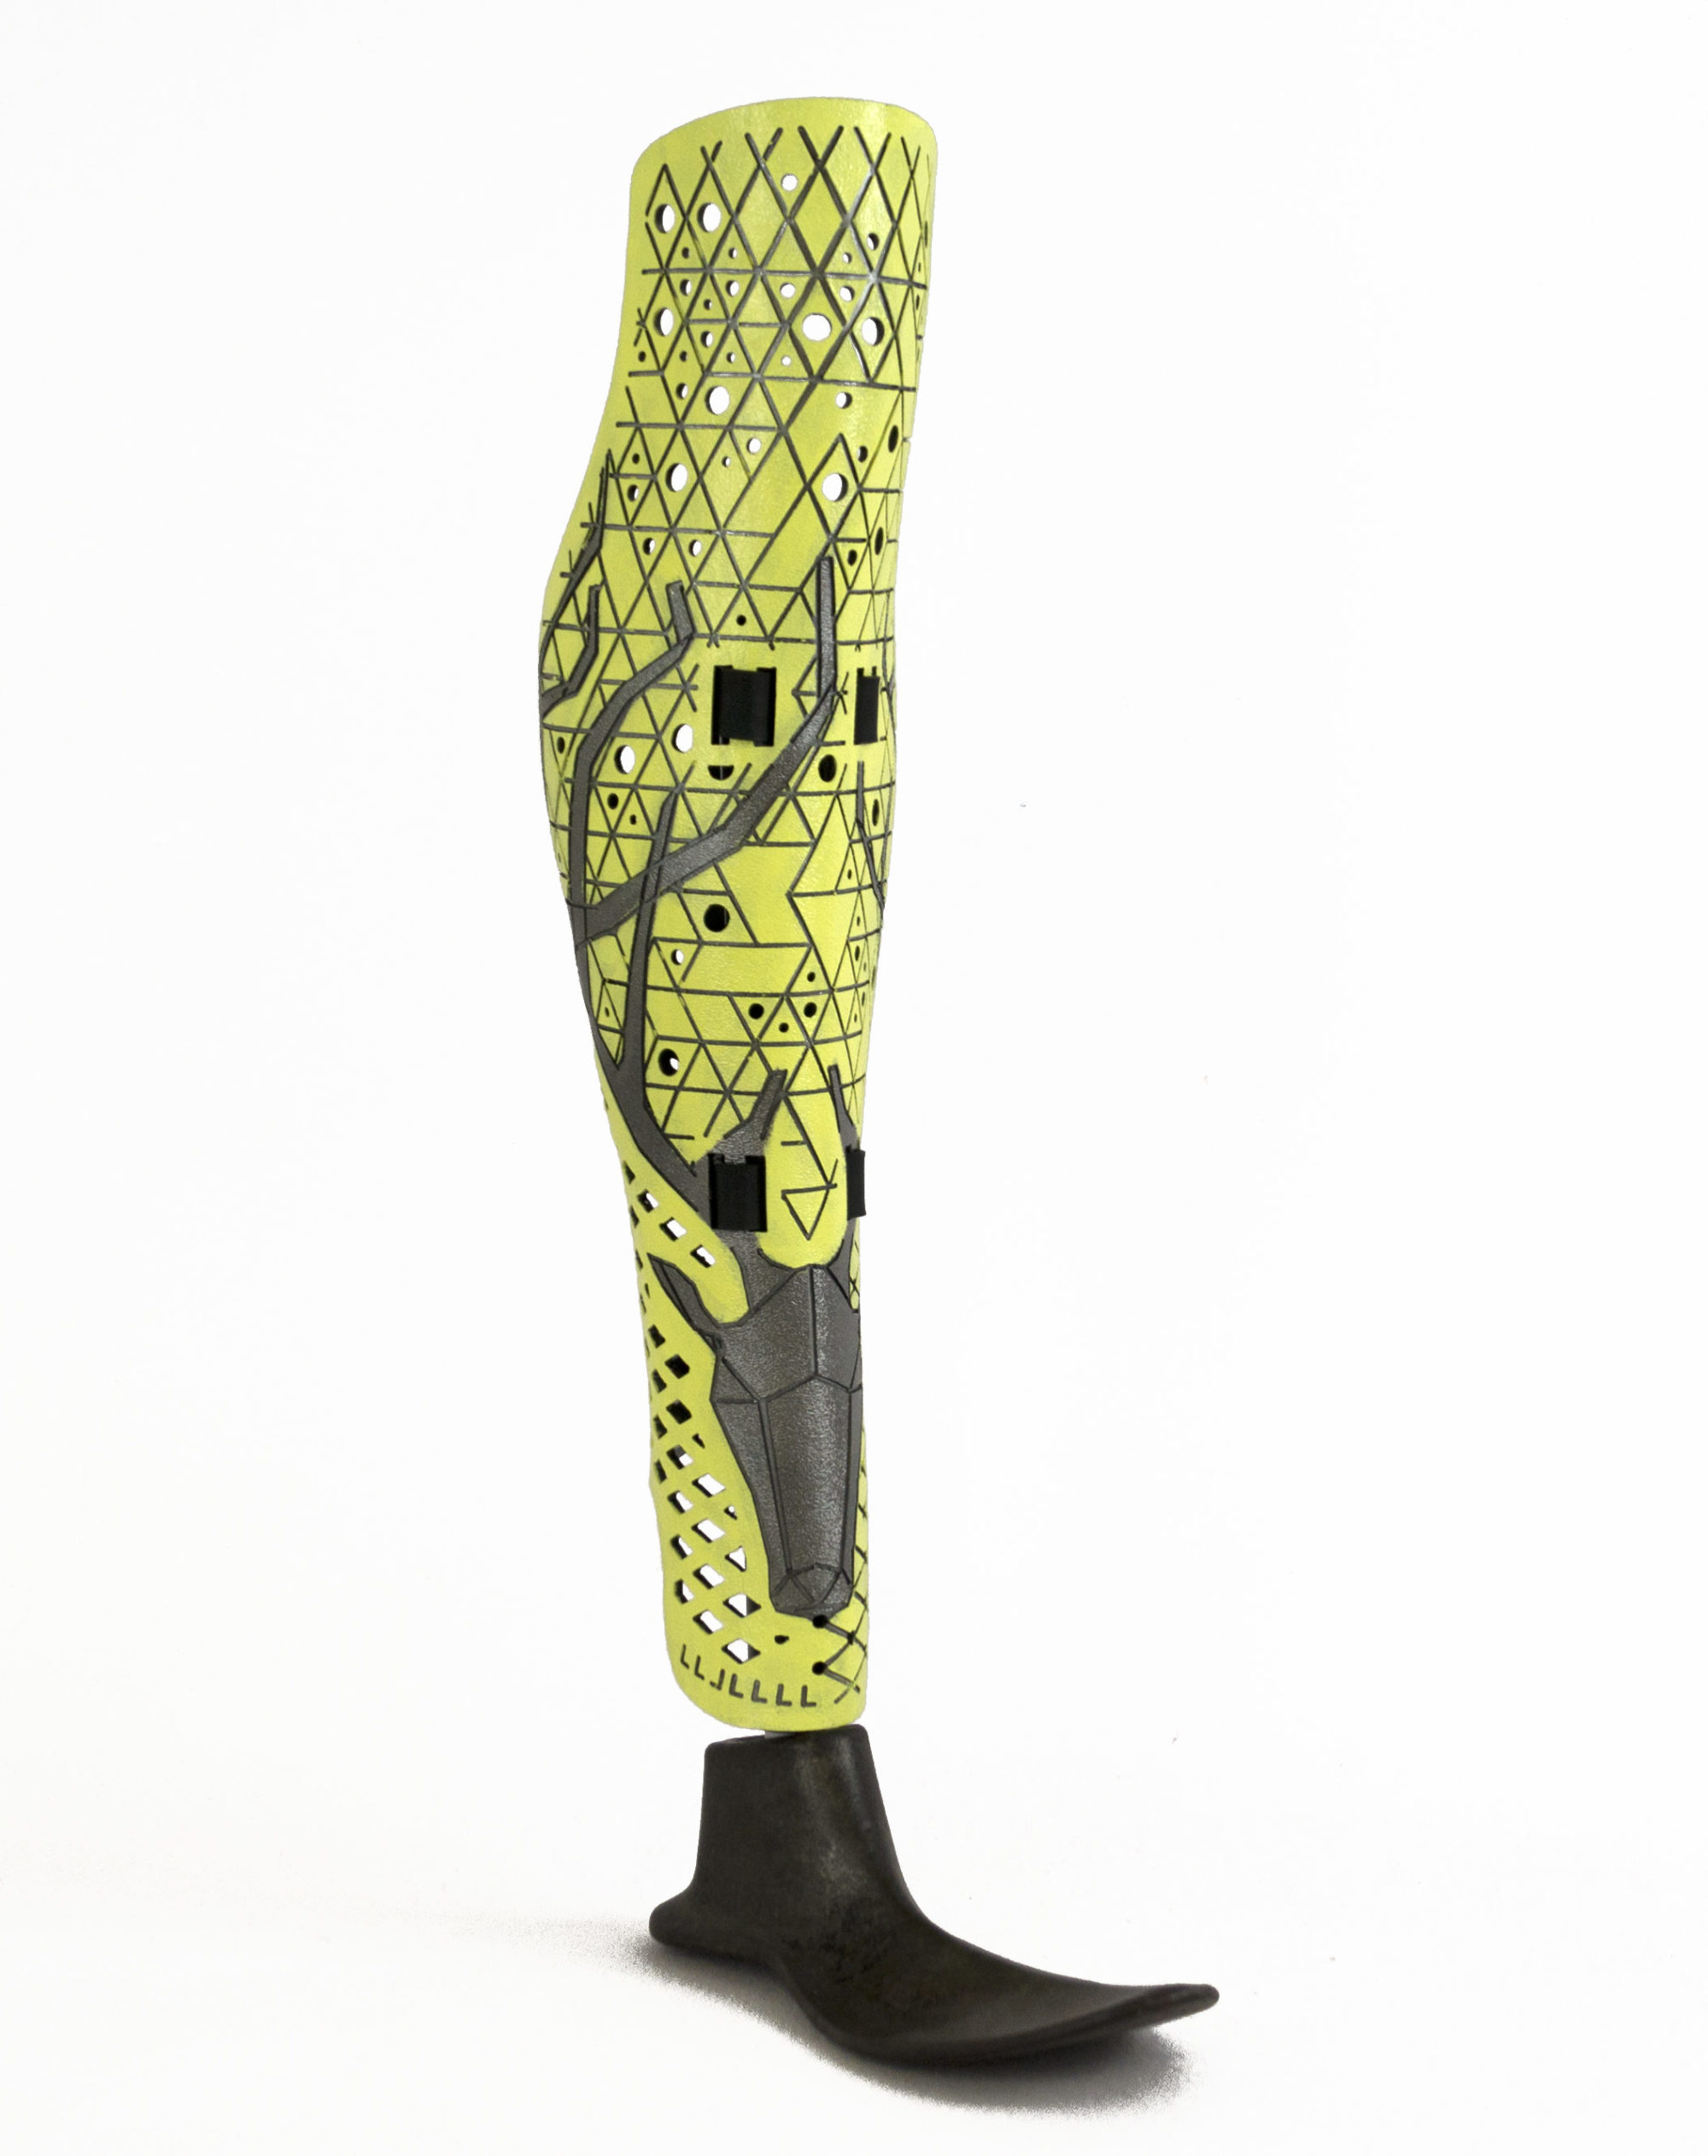 yellow prosthetic leg with geometric design